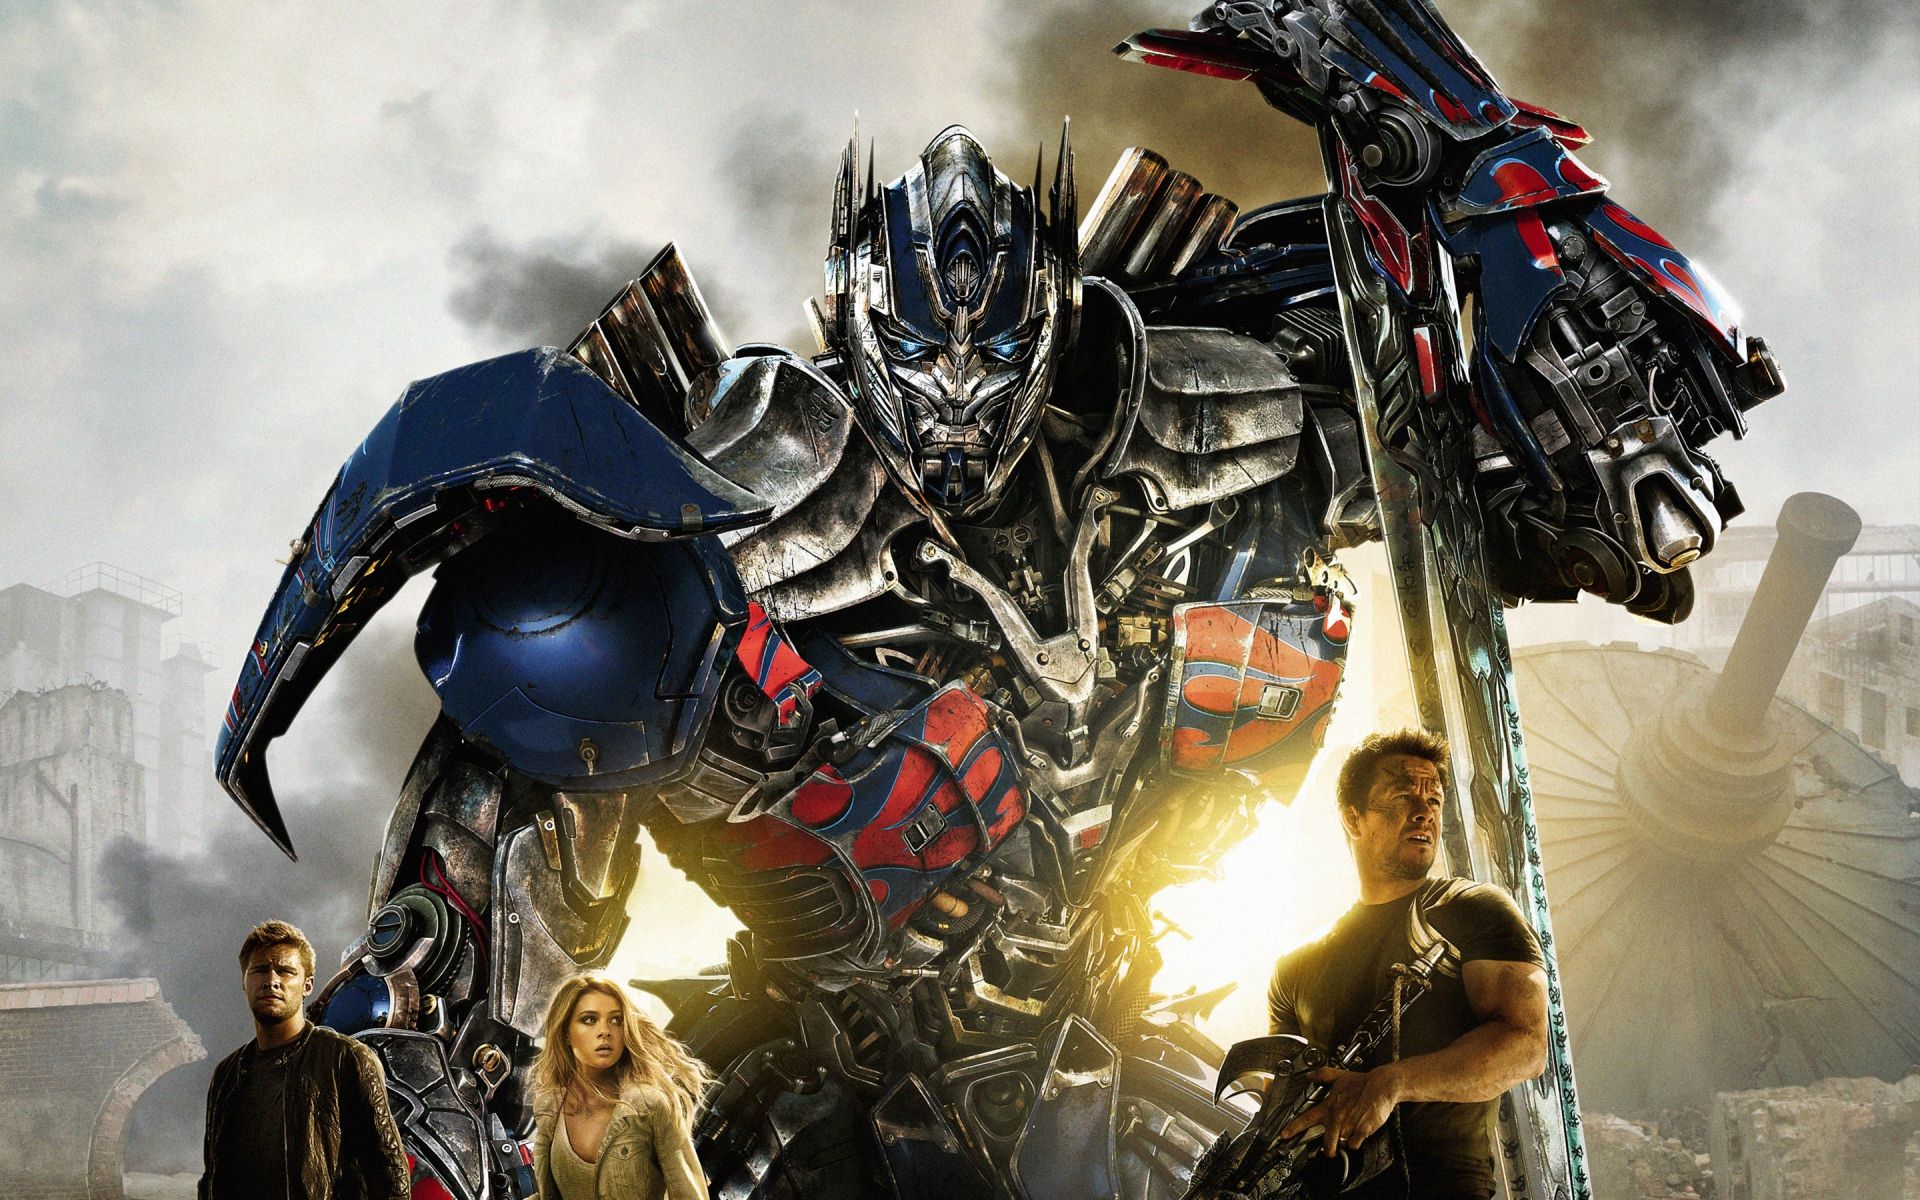 Transformers 4 Movie Poster - wallpaper.